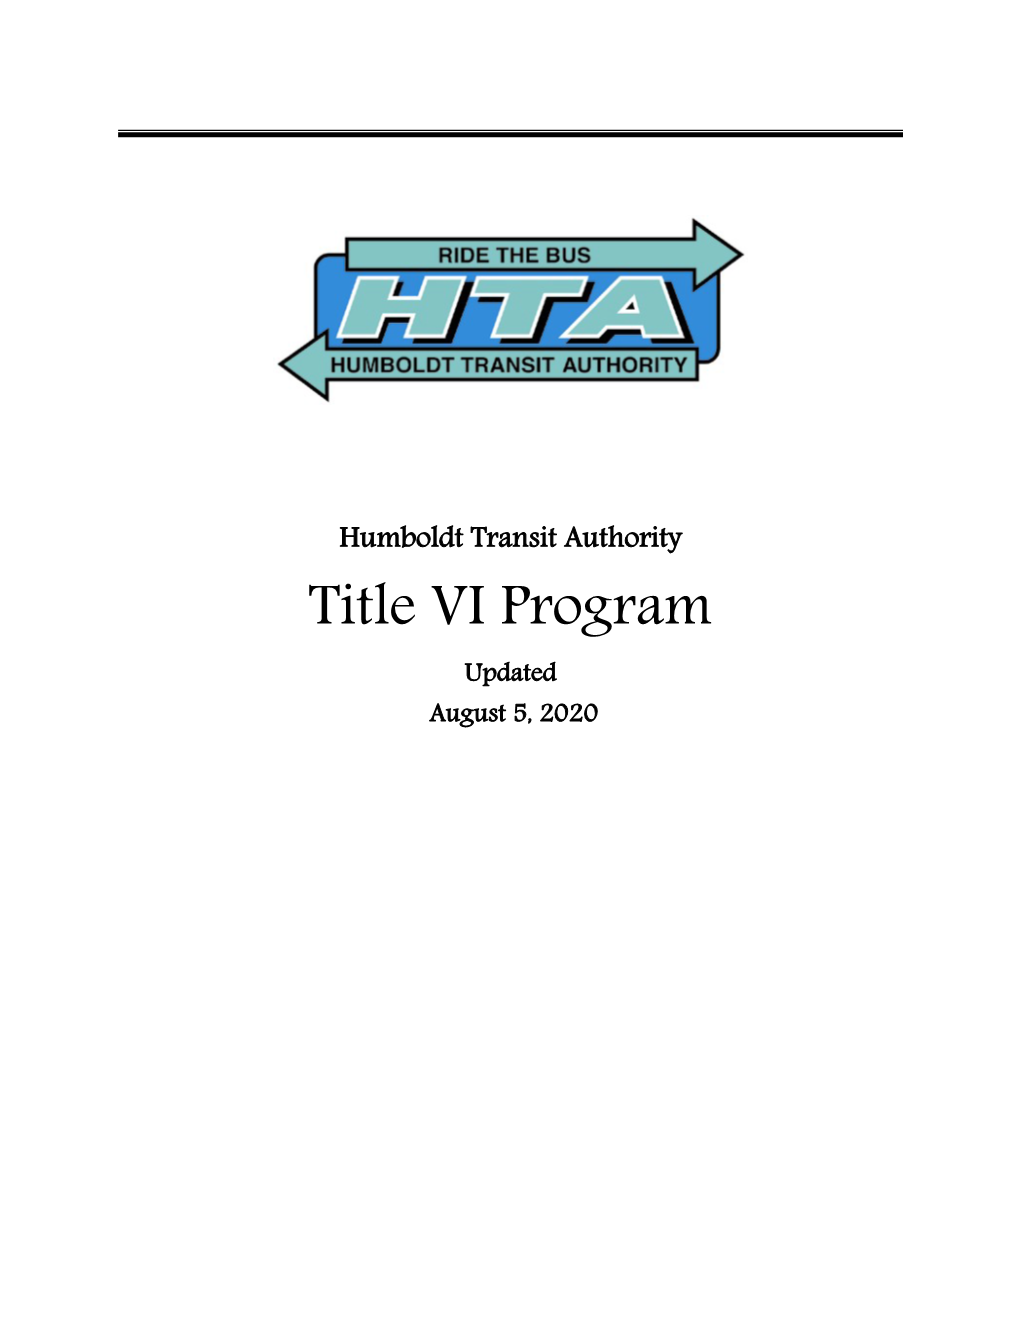 Title VI Program Updated August 5, 2020